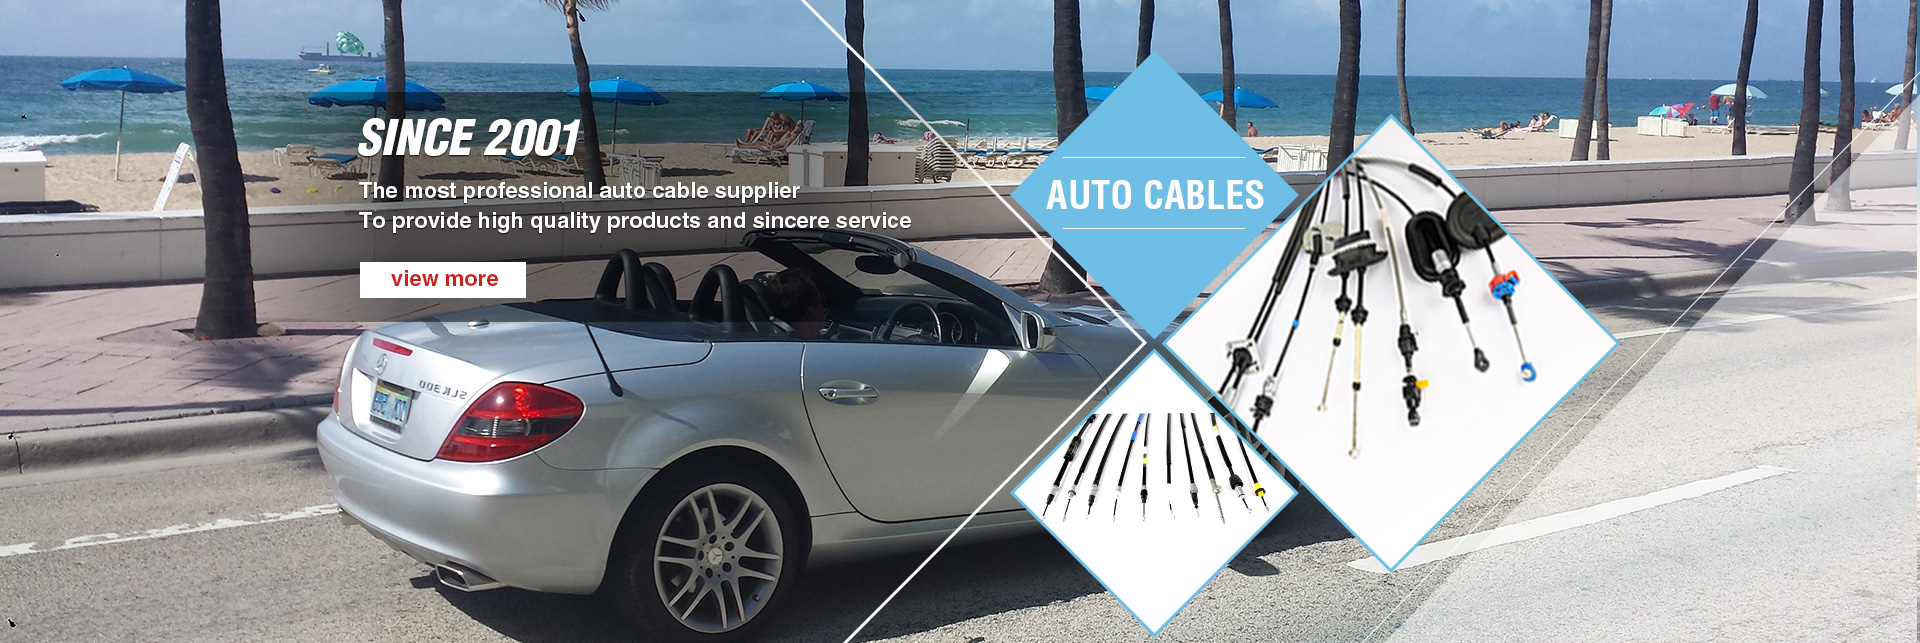 Professional Auto Cable Supplier